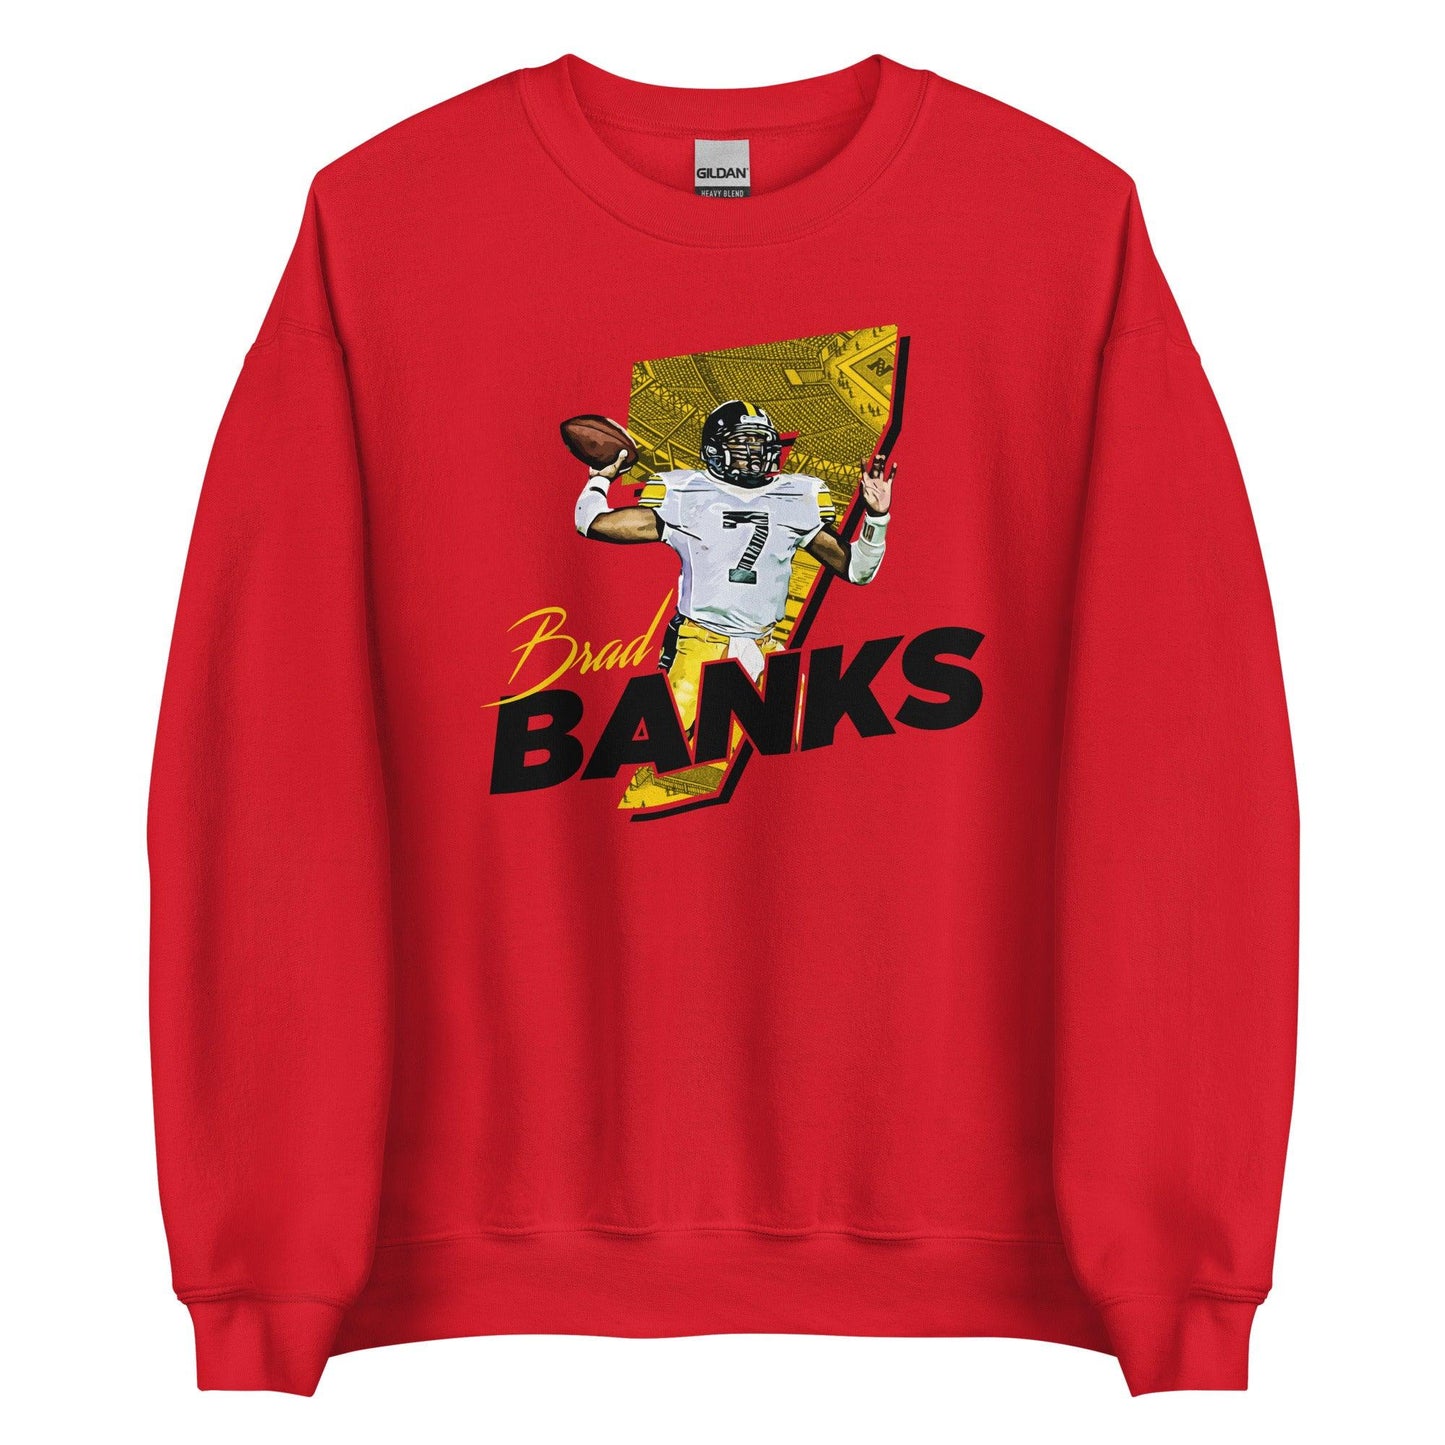 Brad Banks "Throwback" Sweatshirt - Fan Arch